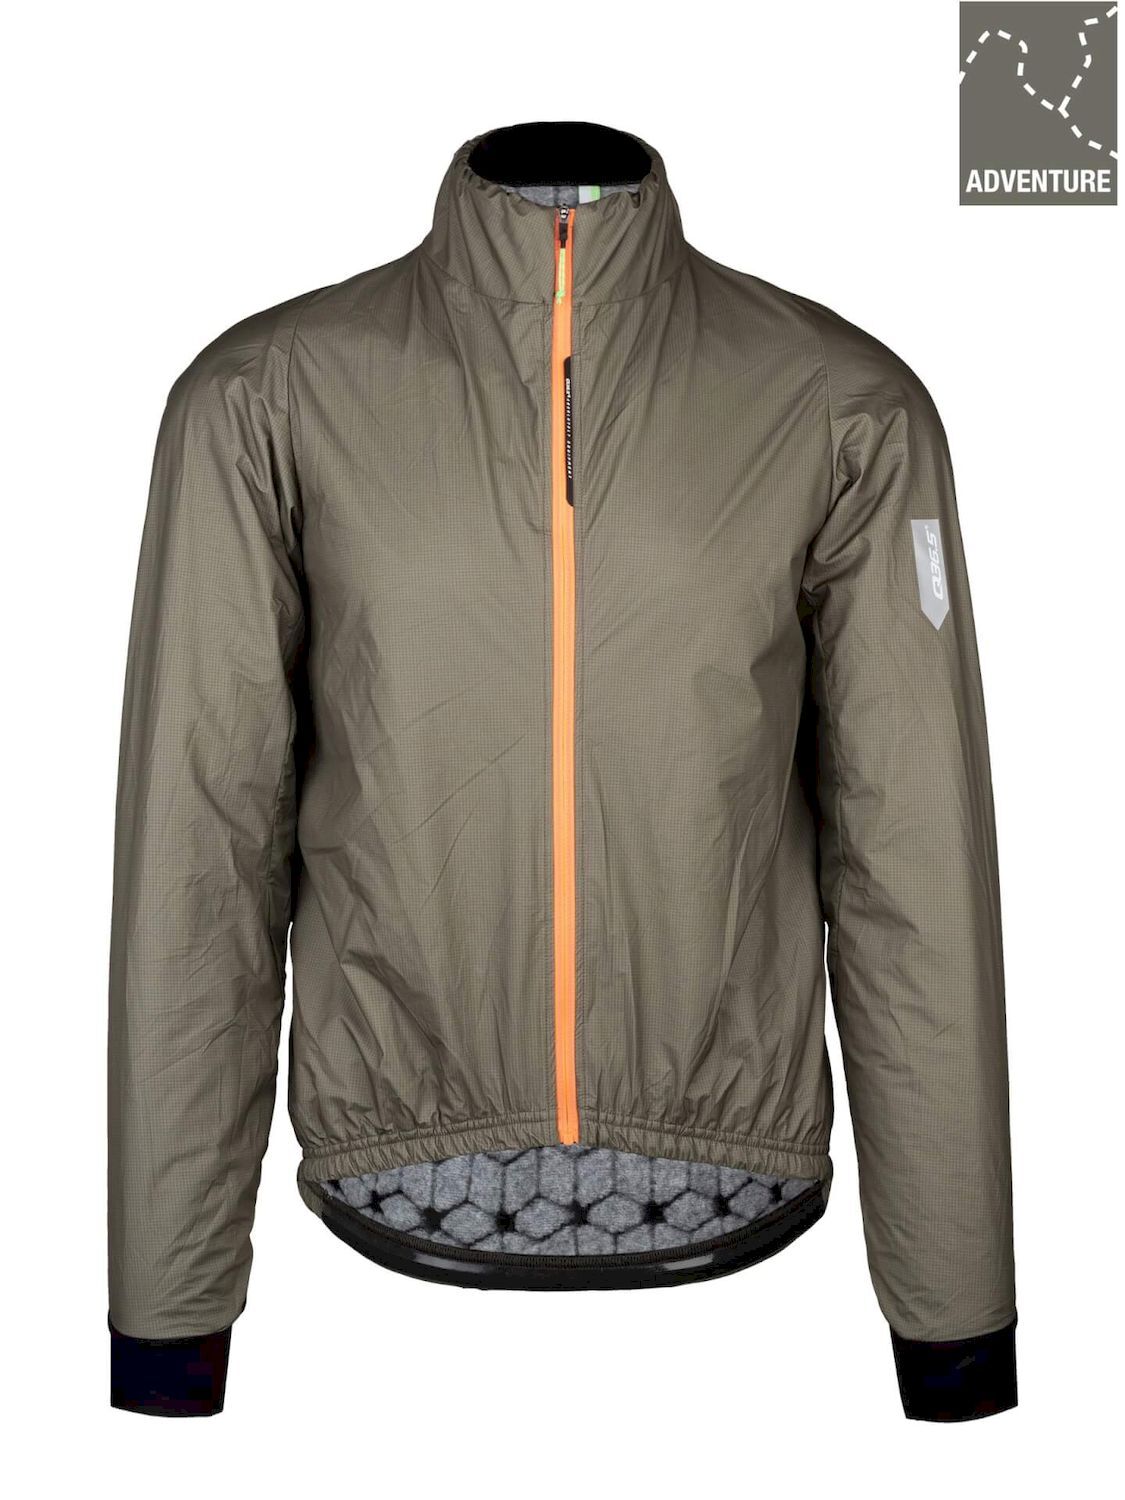 Q36.5 Adventure Winter Jacket - Cycling jacket - Men's